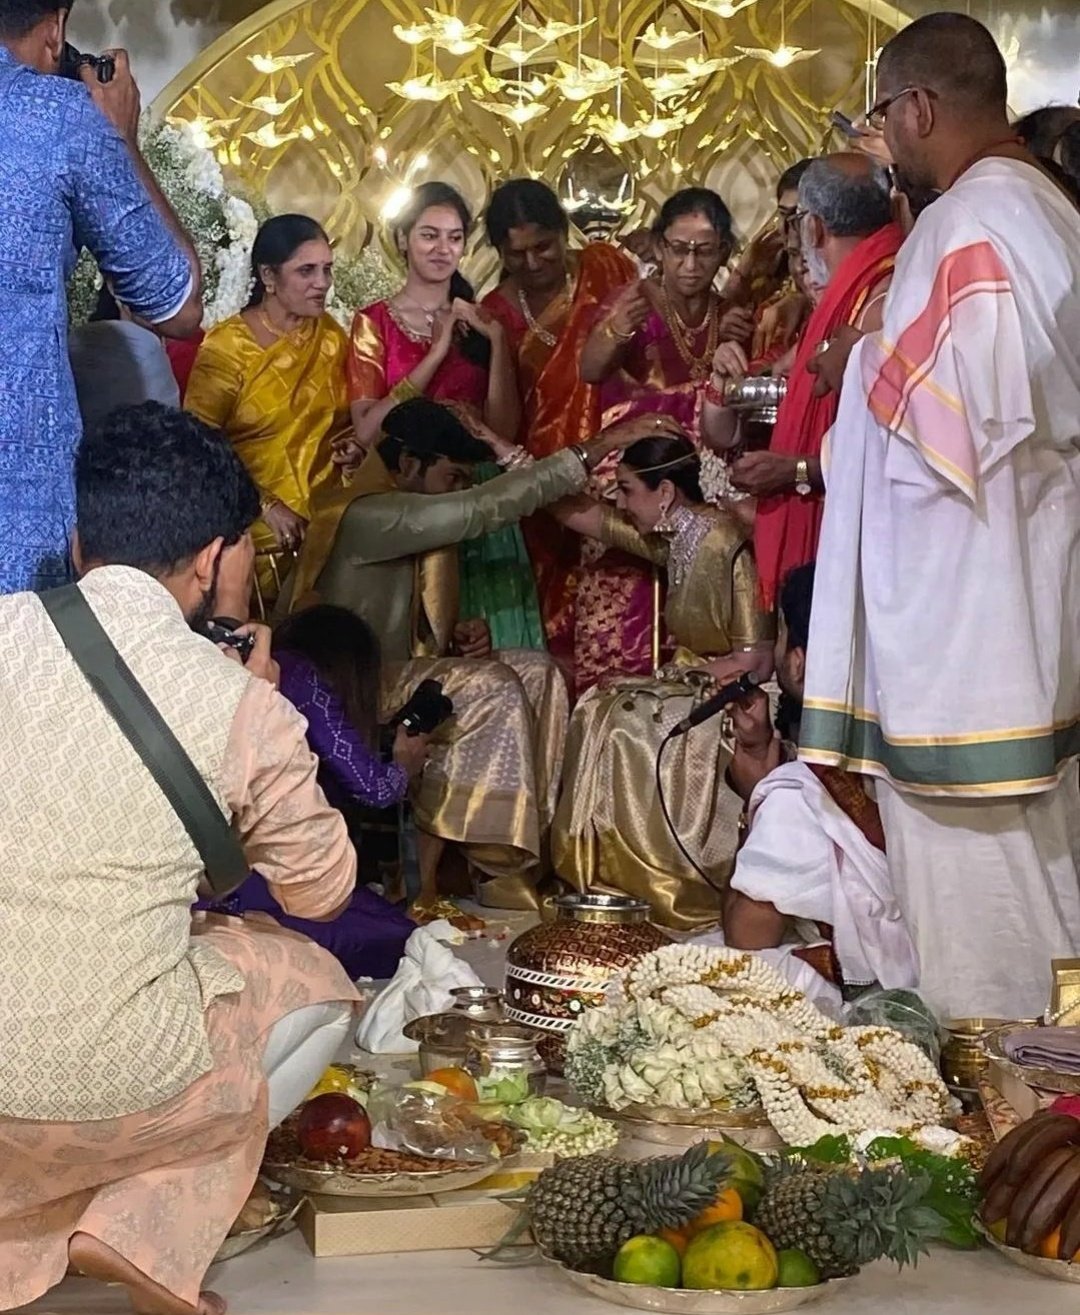 Aadhi pinnisetty and nikki galrani marriage photos getting viral on social media